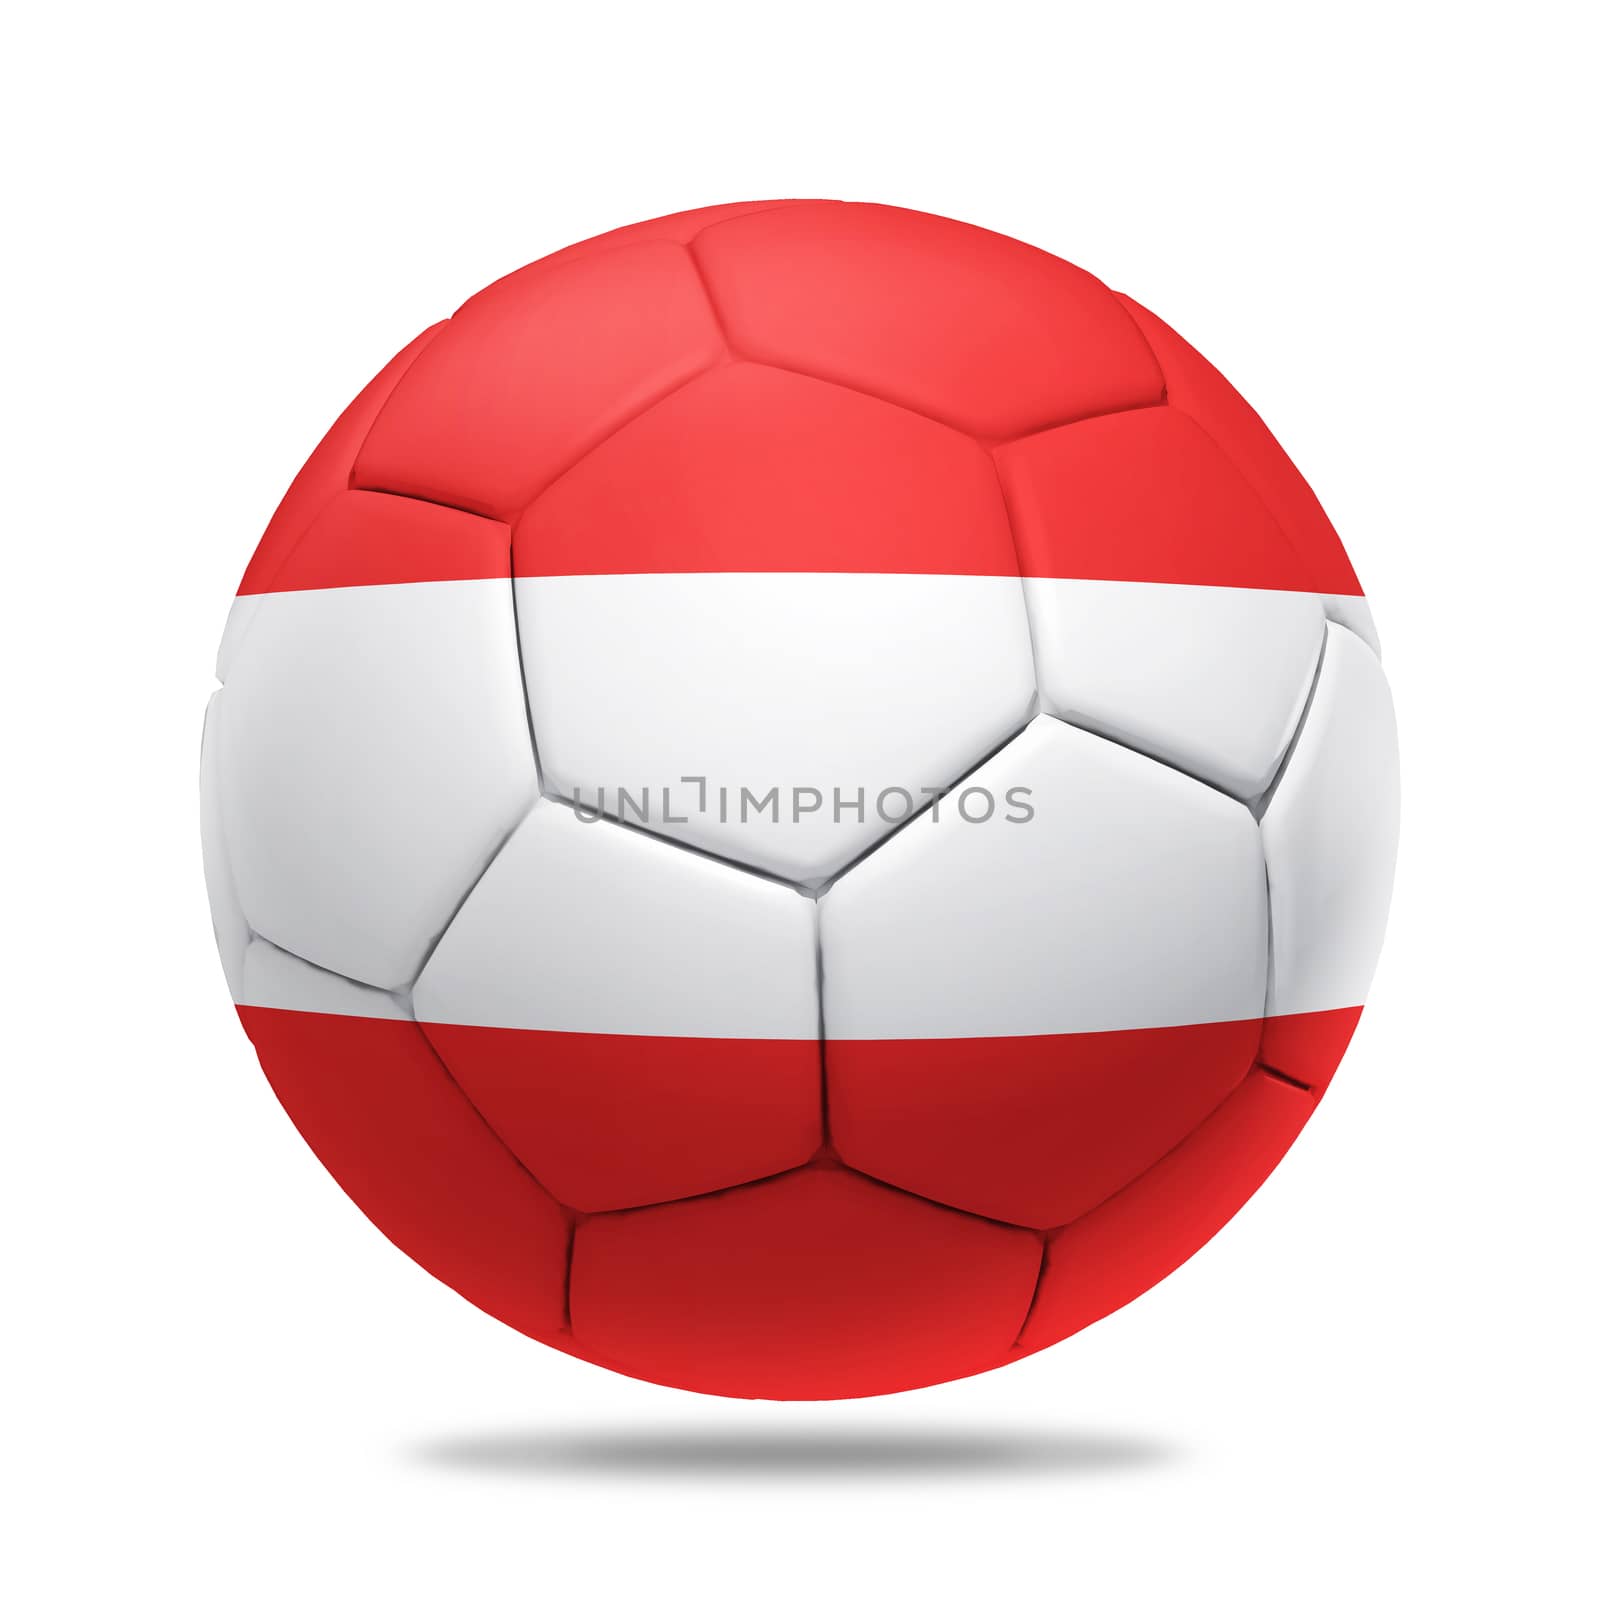 3D soccer ball with Austria team flag, isolated on white